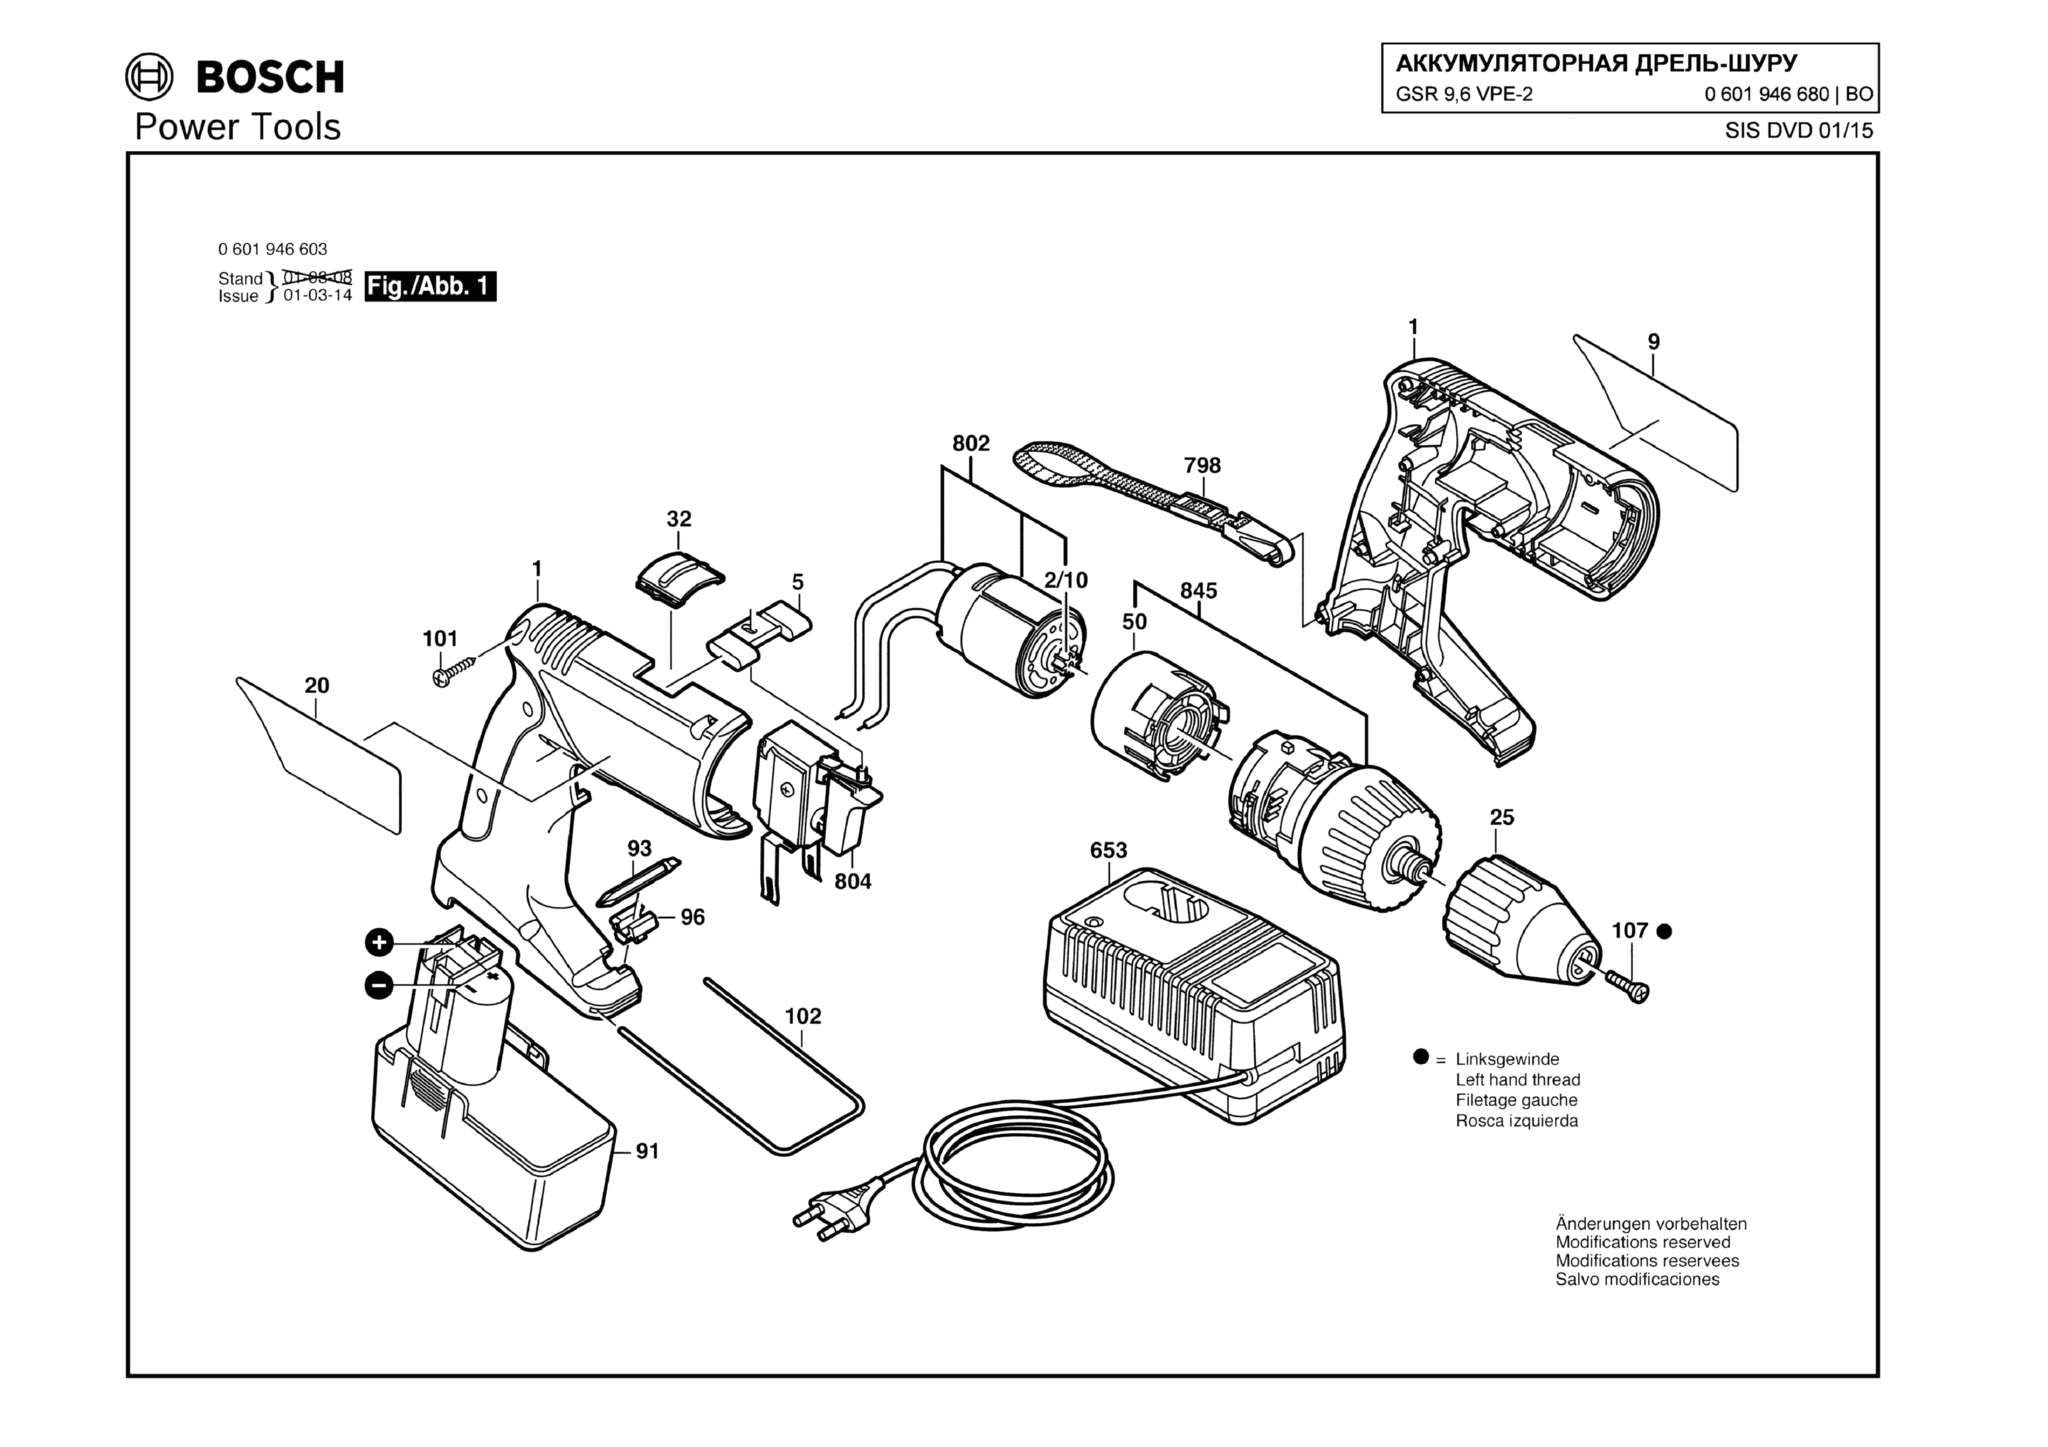 Запчасти, схема и деталировка Bosch GSR 9,6 VPE-2 (ТИП 0601946680)